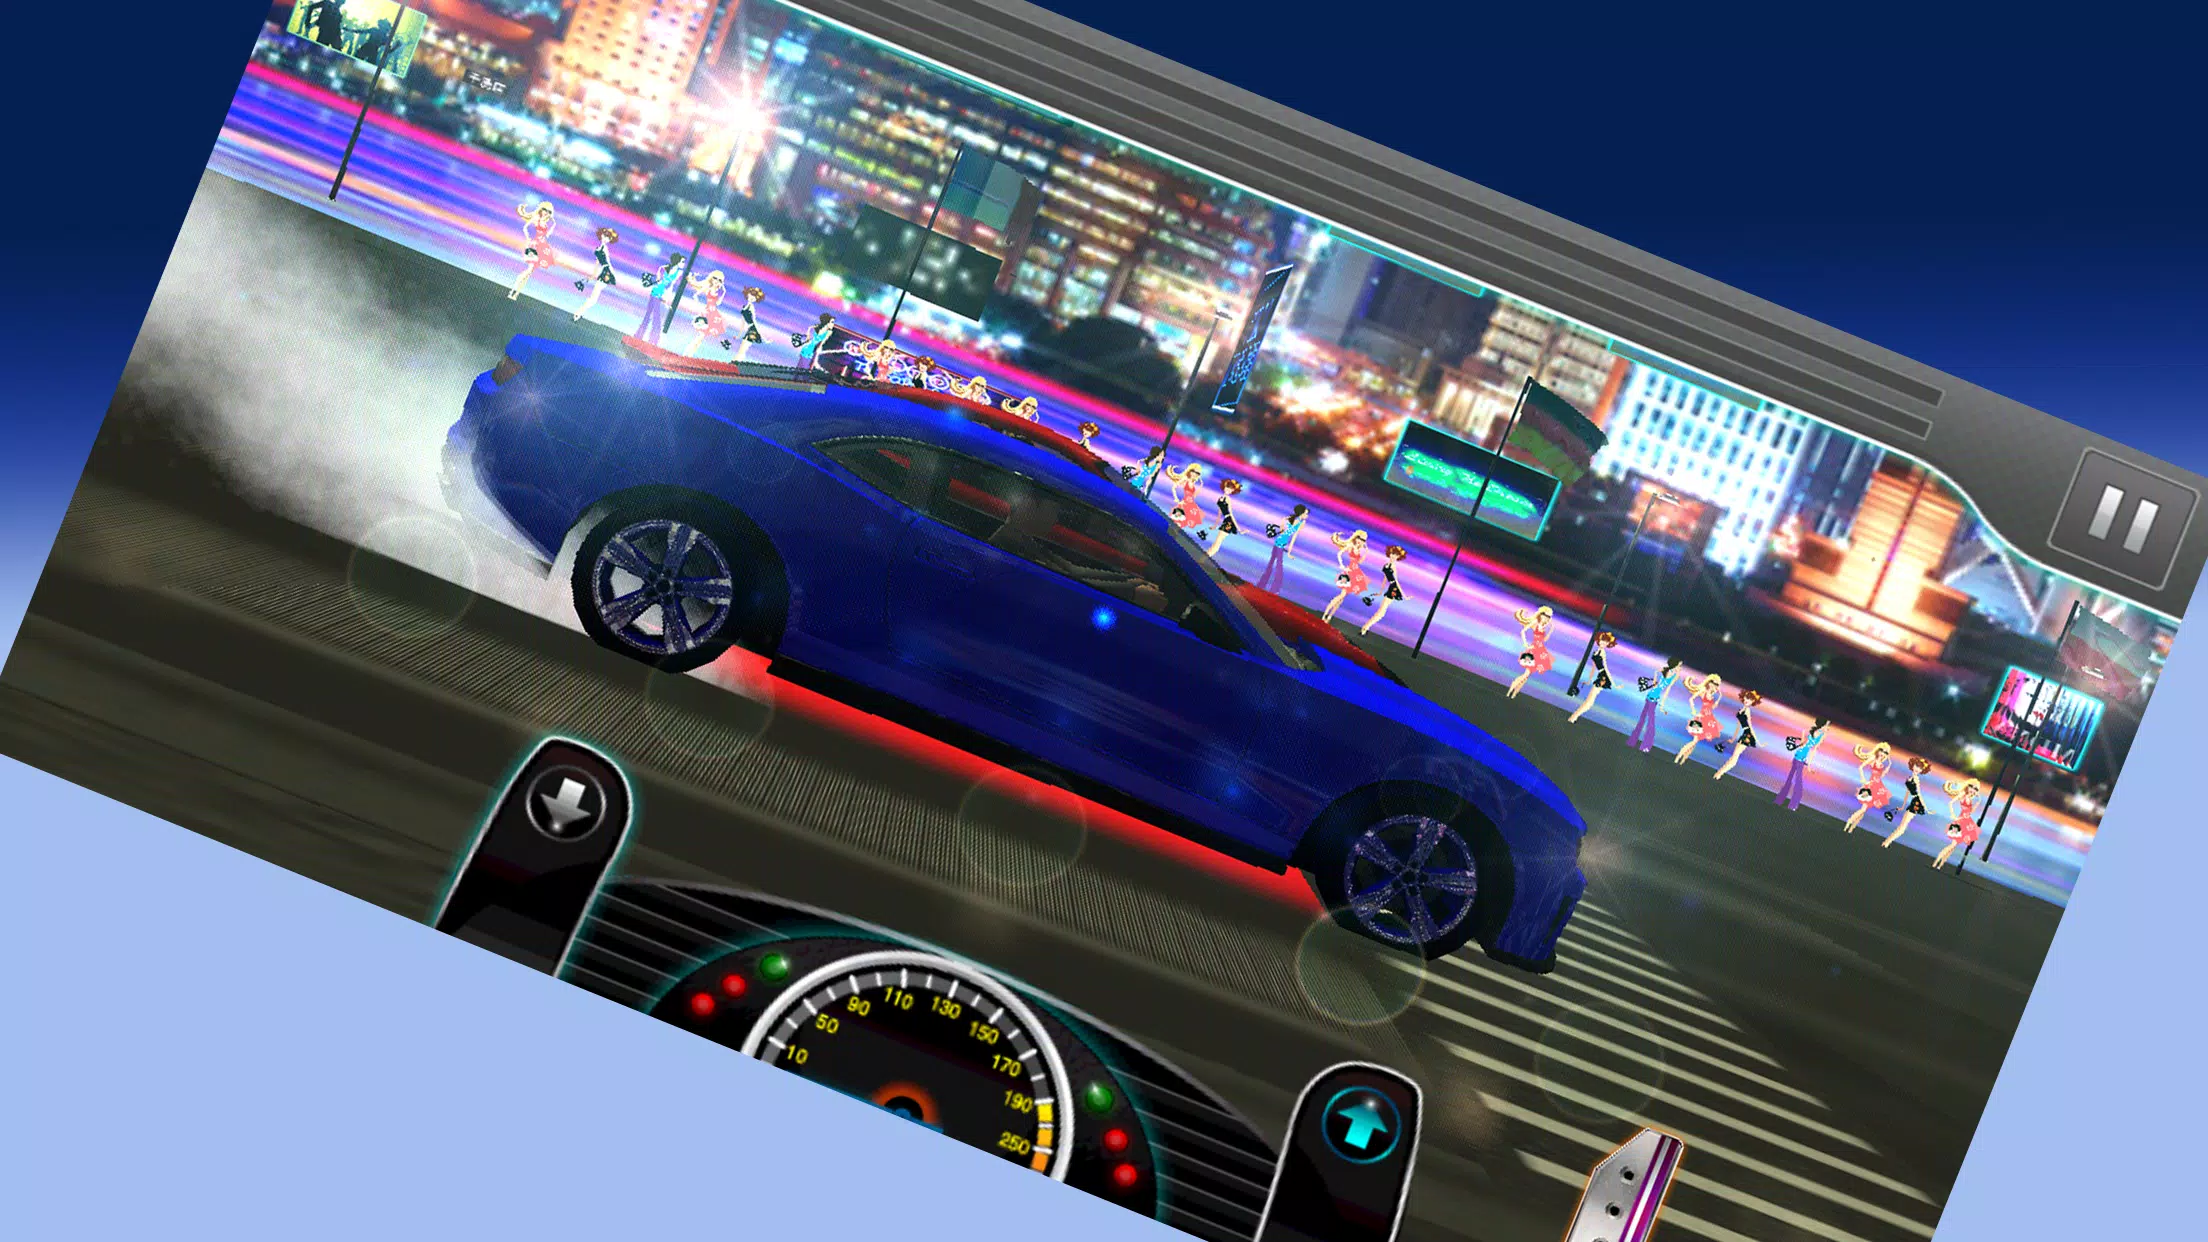 Download do APK de Shift - Simulador de carro para Android